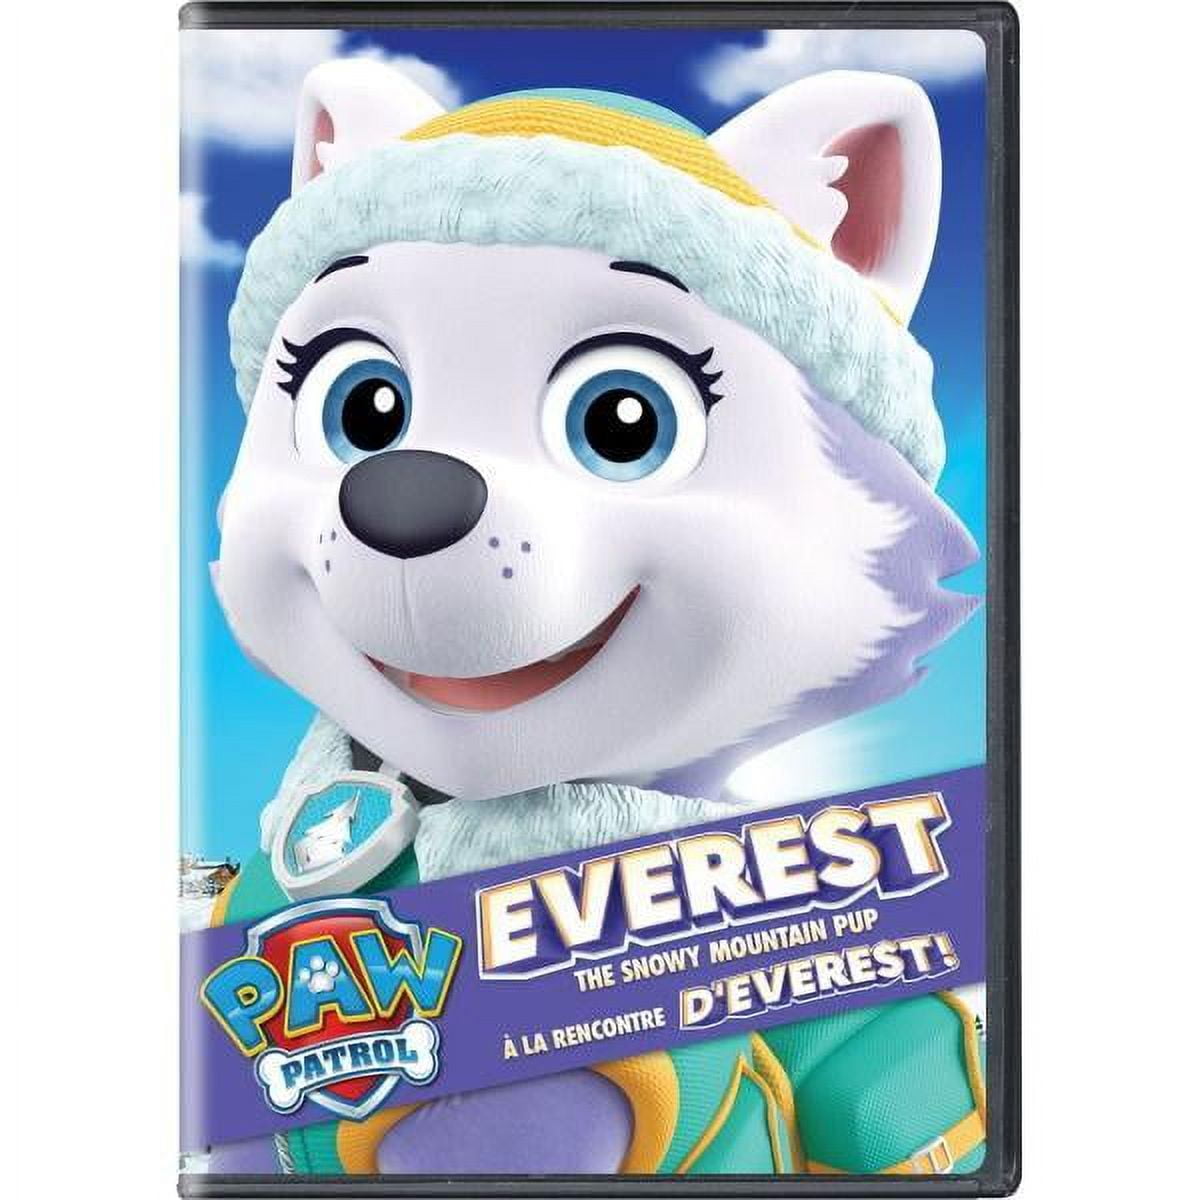 Meet Everest Paw Patrol Printables (on DvD this summer)